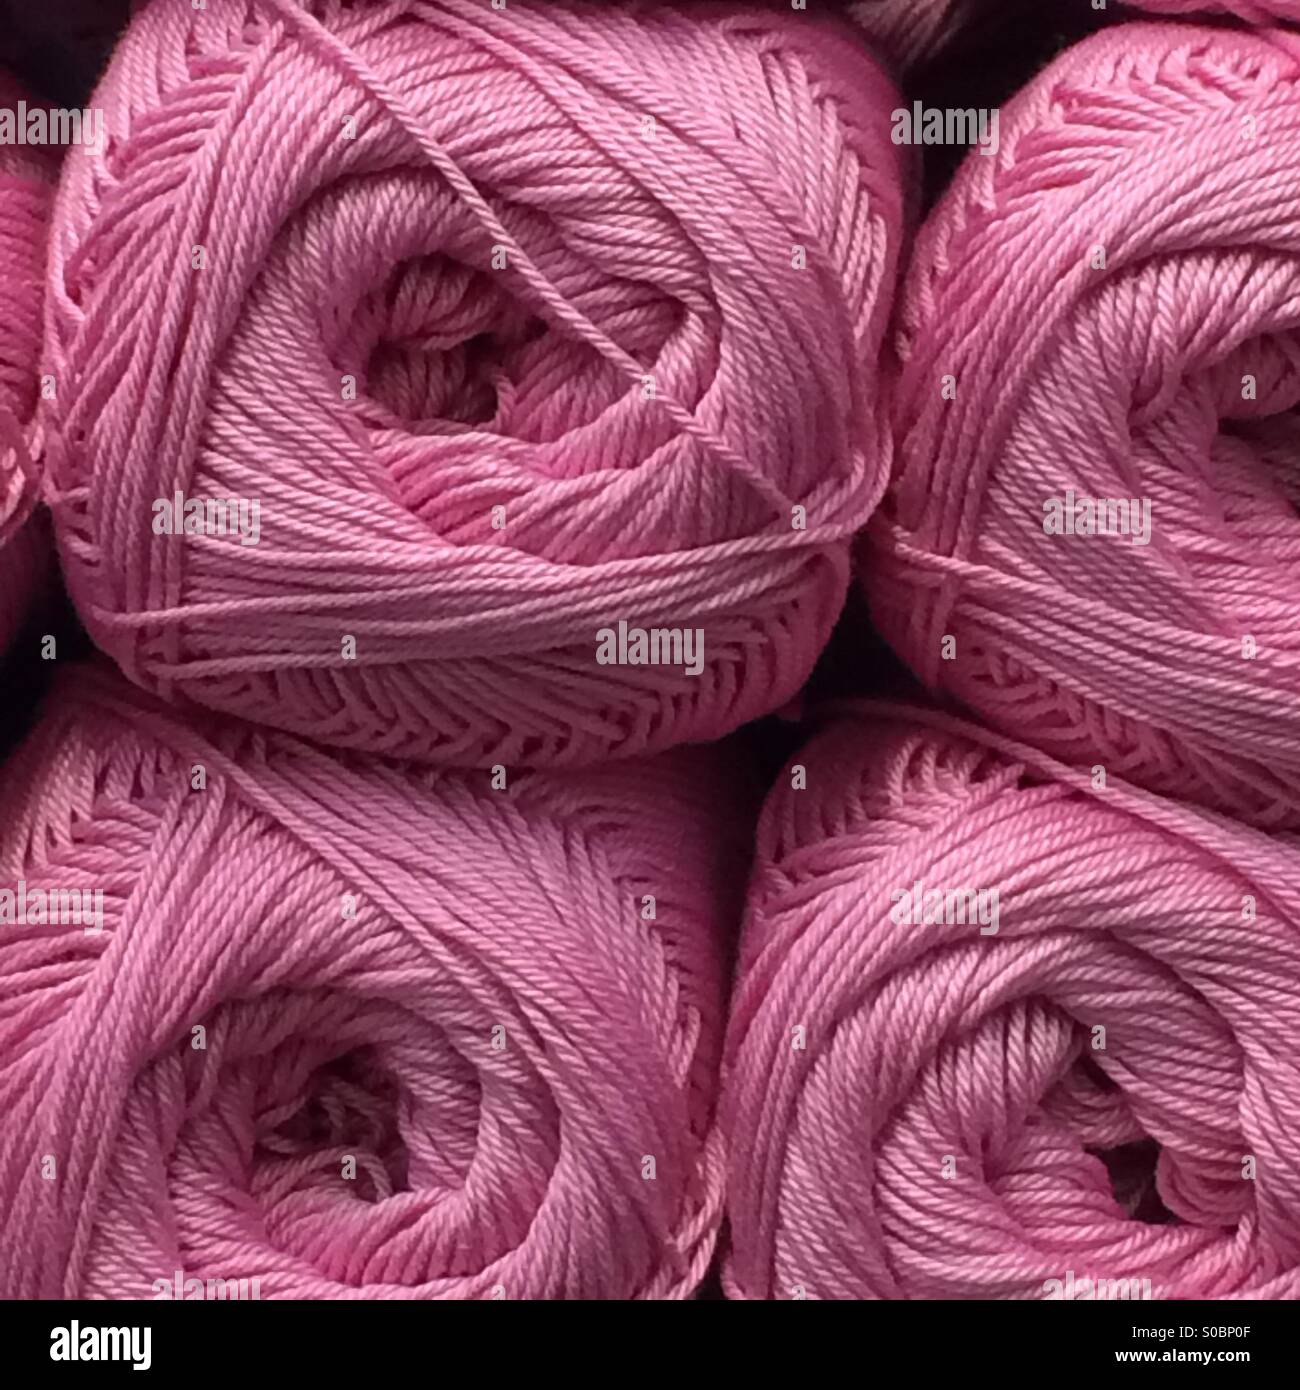 Balls of wool stacked on shelf Stock Photo